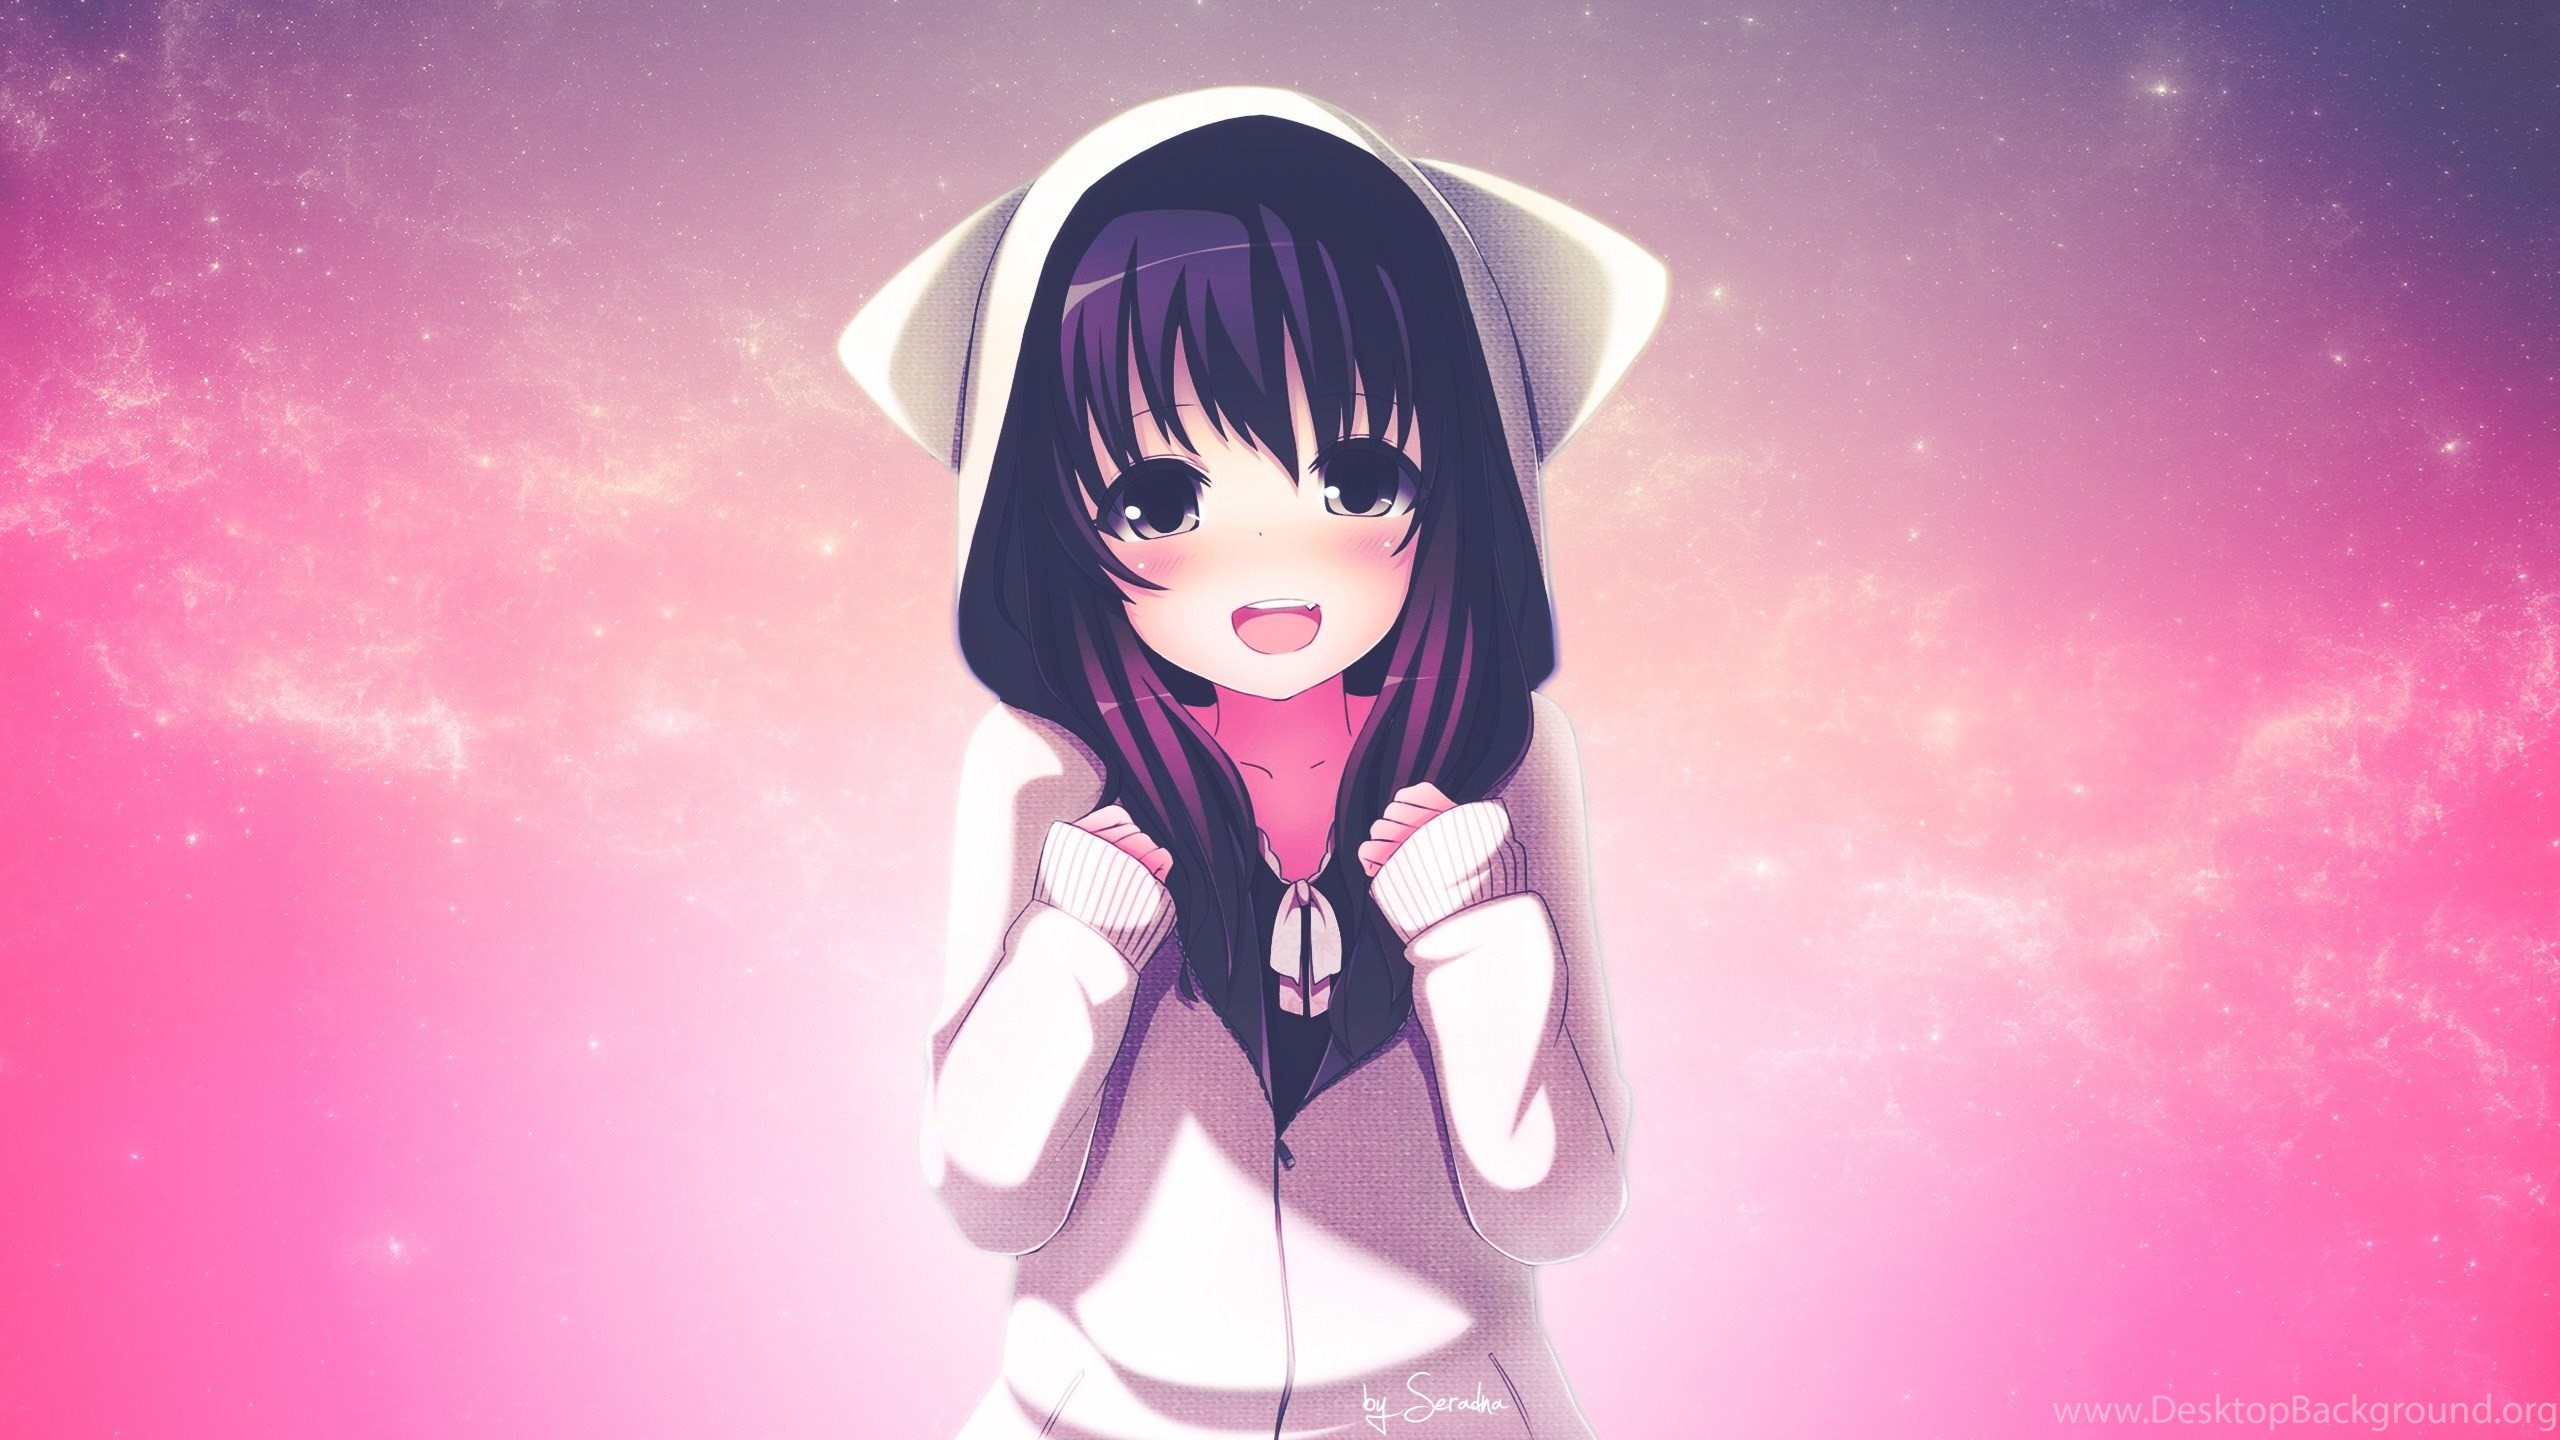 2560x1440 cute anime girls backgrounds new hd wallpapers desktop background